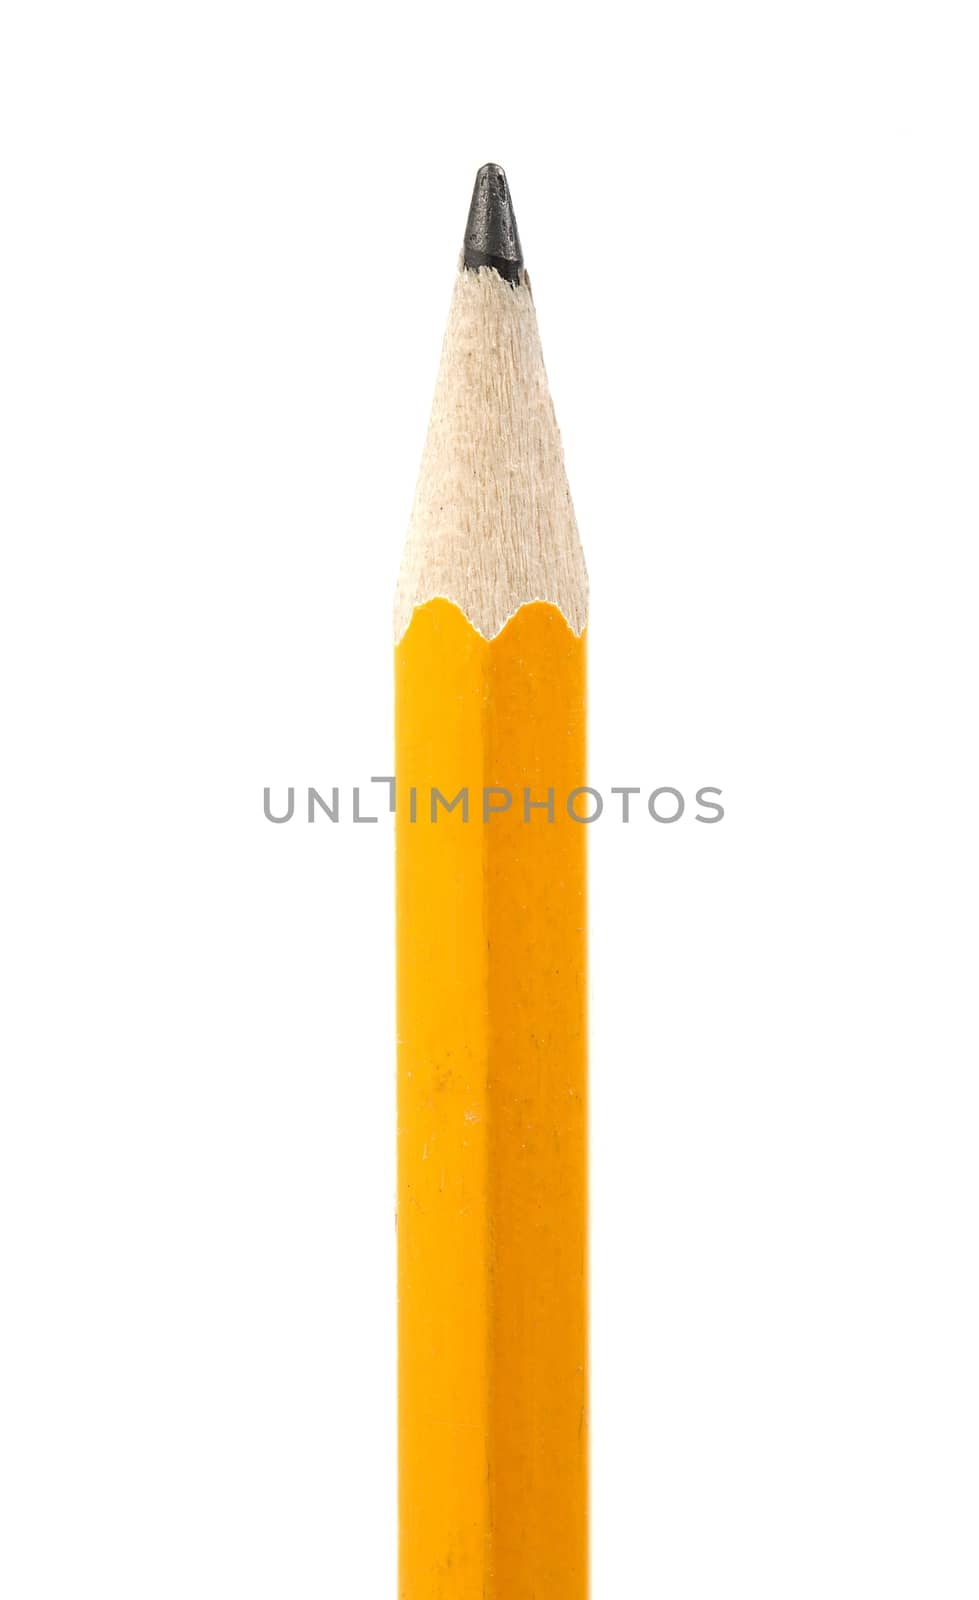 Closeup of a graphite pencil